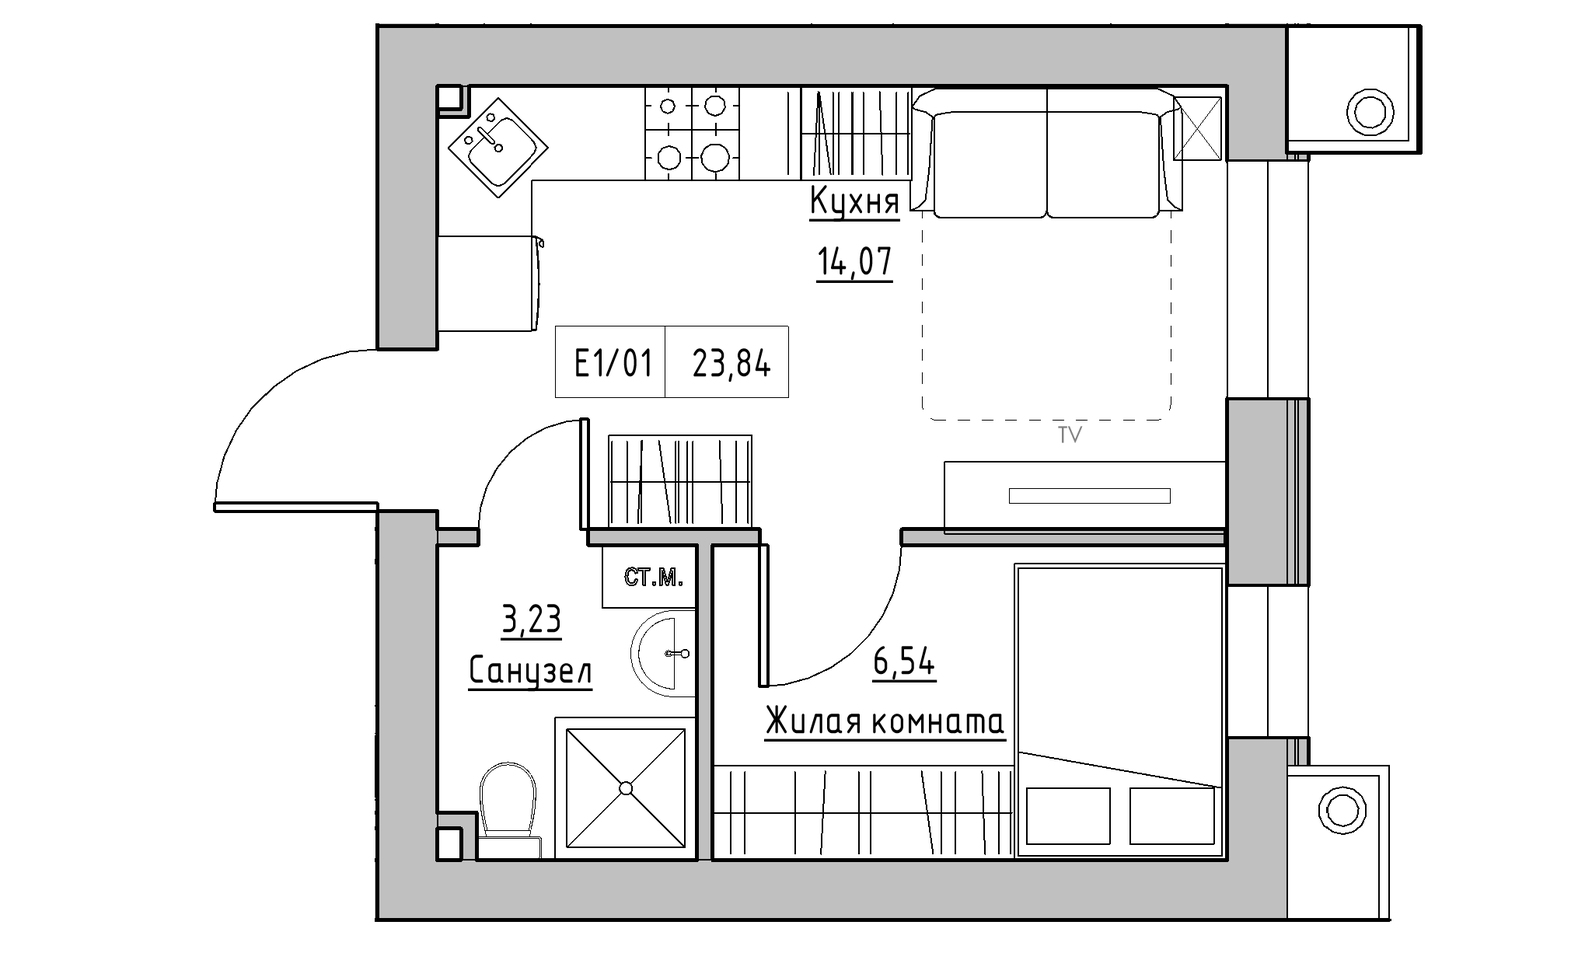 Planning 1-rm flats area 23.84m2, KS-014-03/0011.